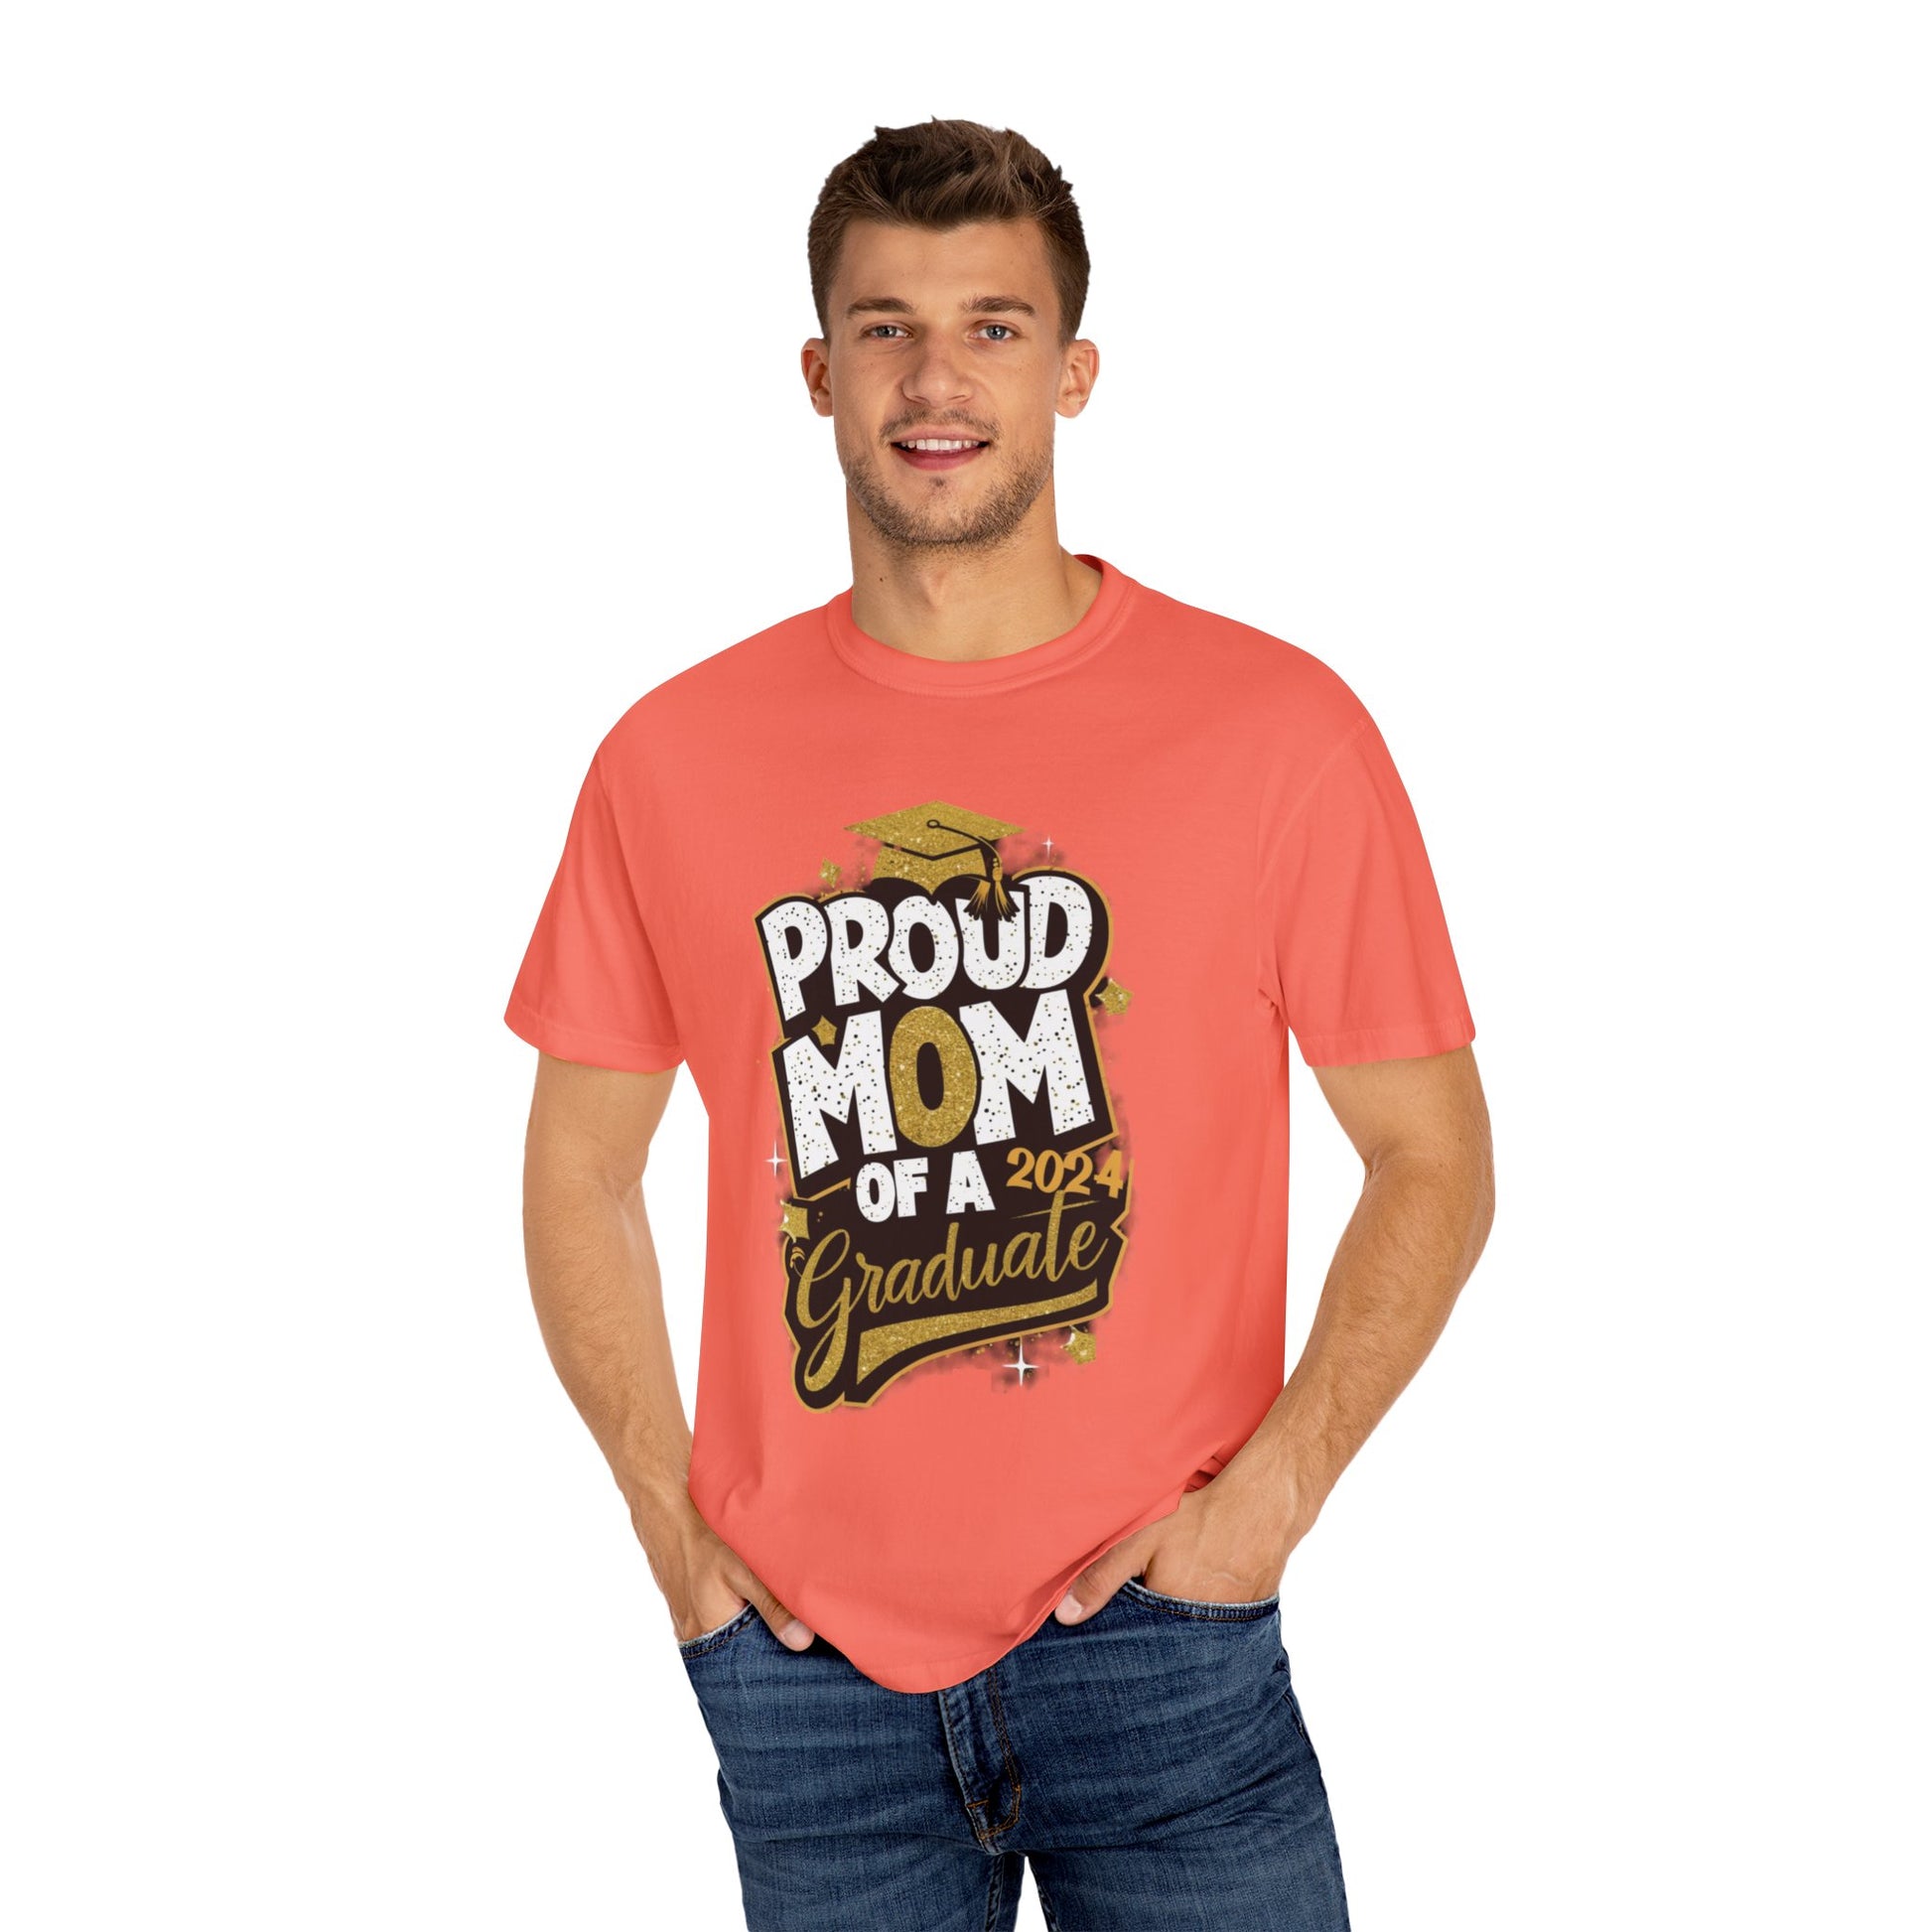 Proud Mom of a 2024 Graduate Unisex Garment-dyed T-shirt Cotton Funny Humorous Graphic Soft Premium Unisex Men Women Bright Salmon T-shirt Birthday Gift-33